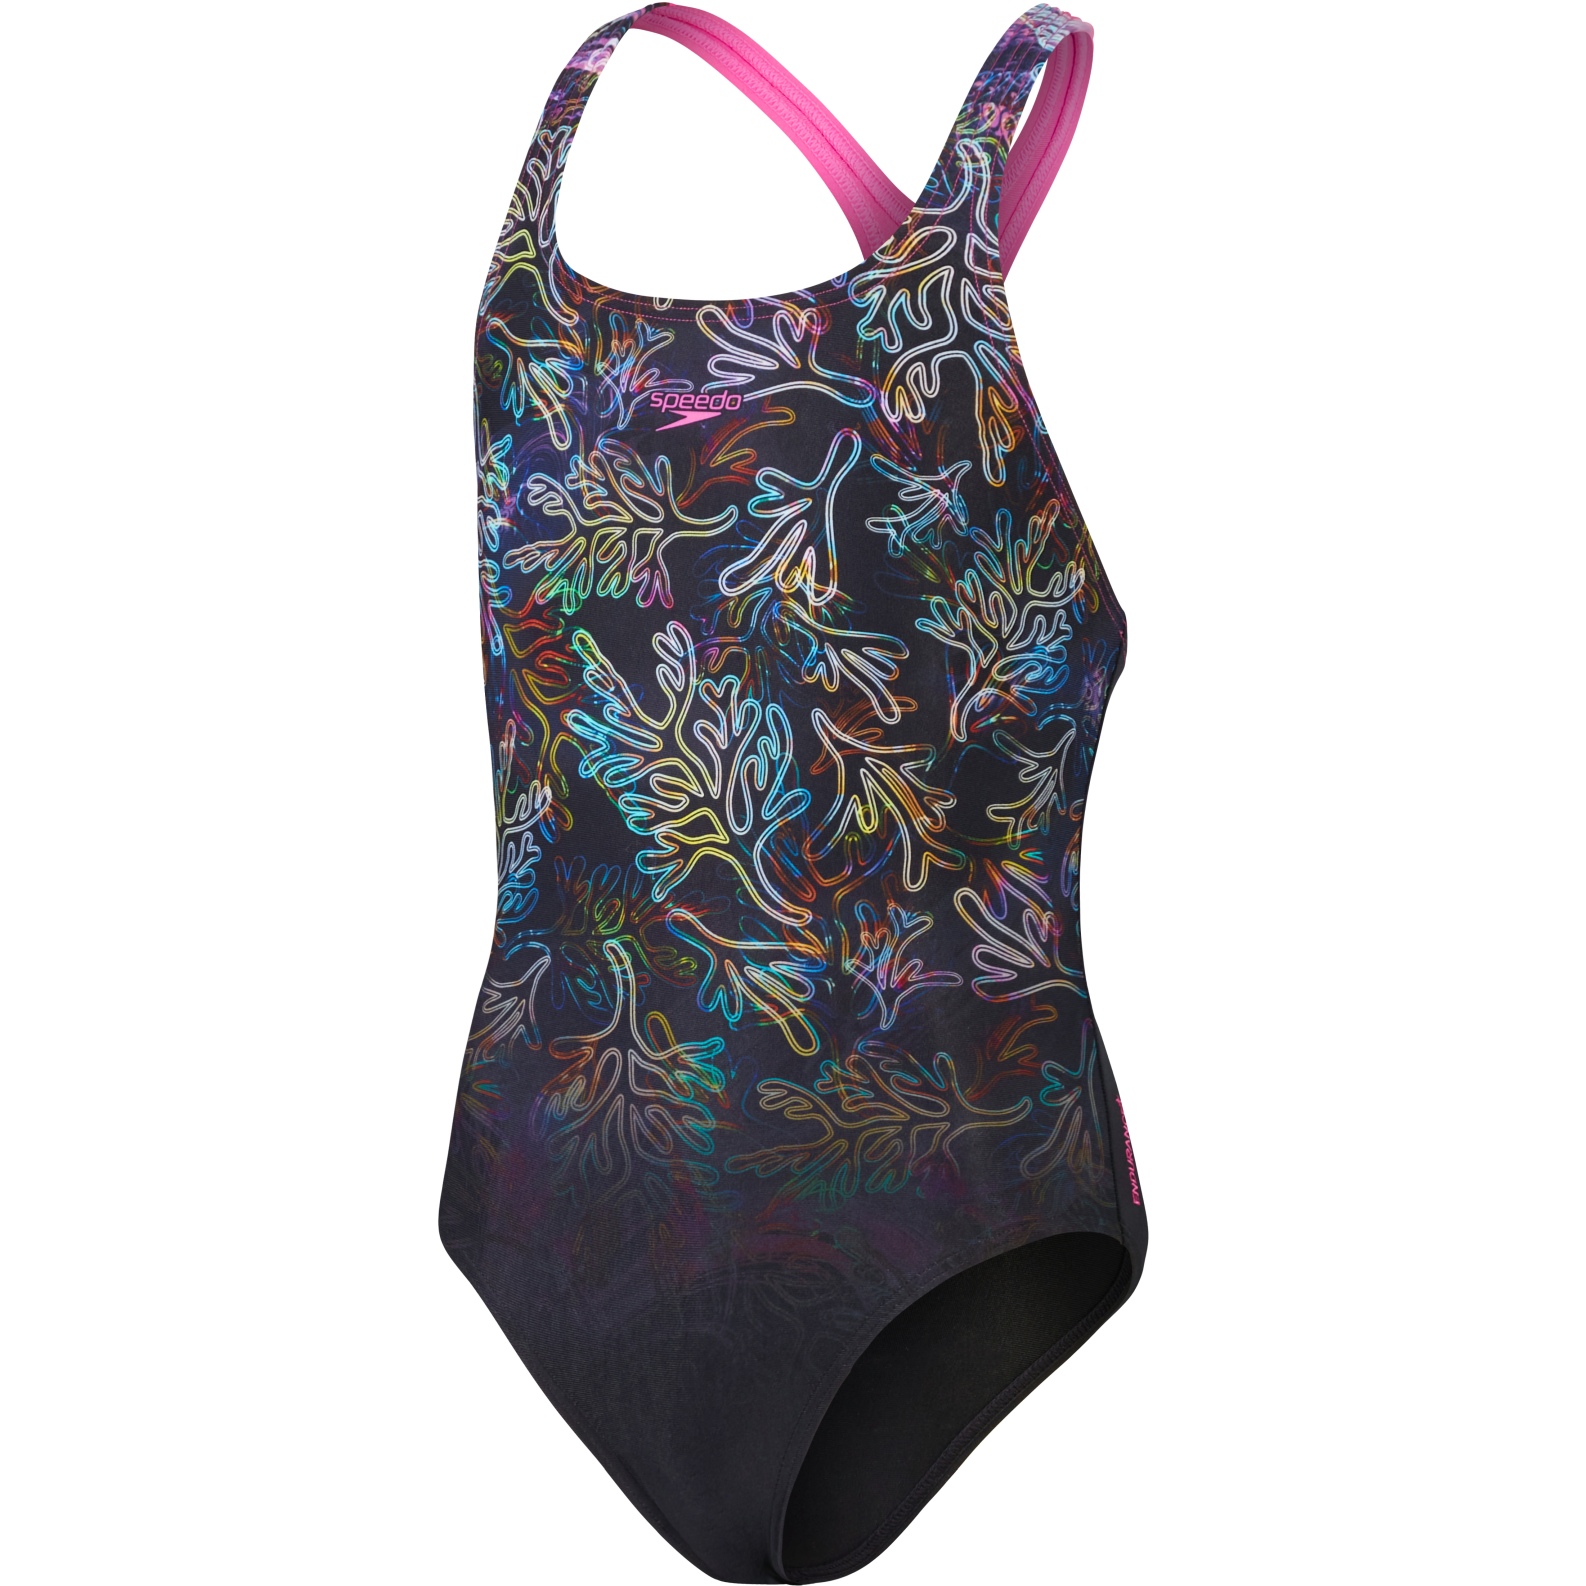 Speedo Digital Placement Medalist Girls Bathing Suit - Black/Orchid ...